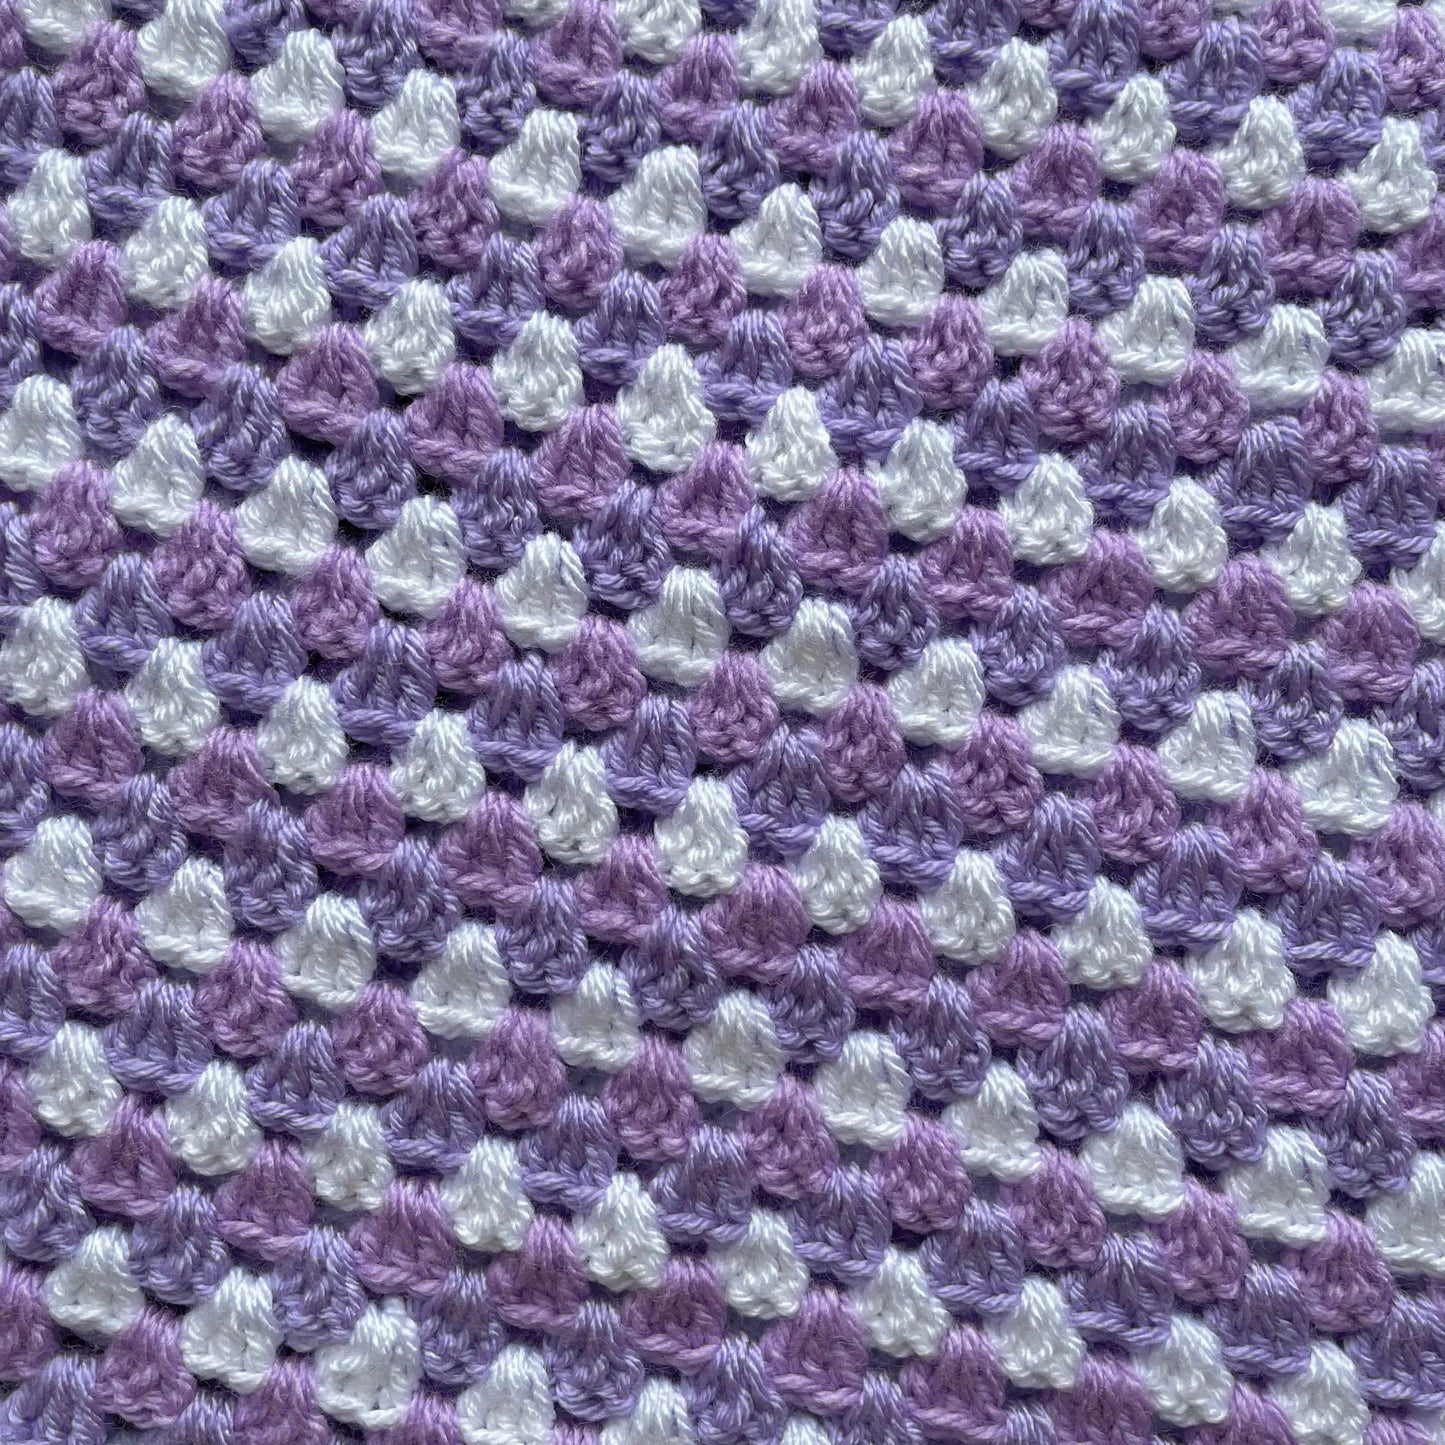 Handmade retro crochet mini skirt in lilac and white